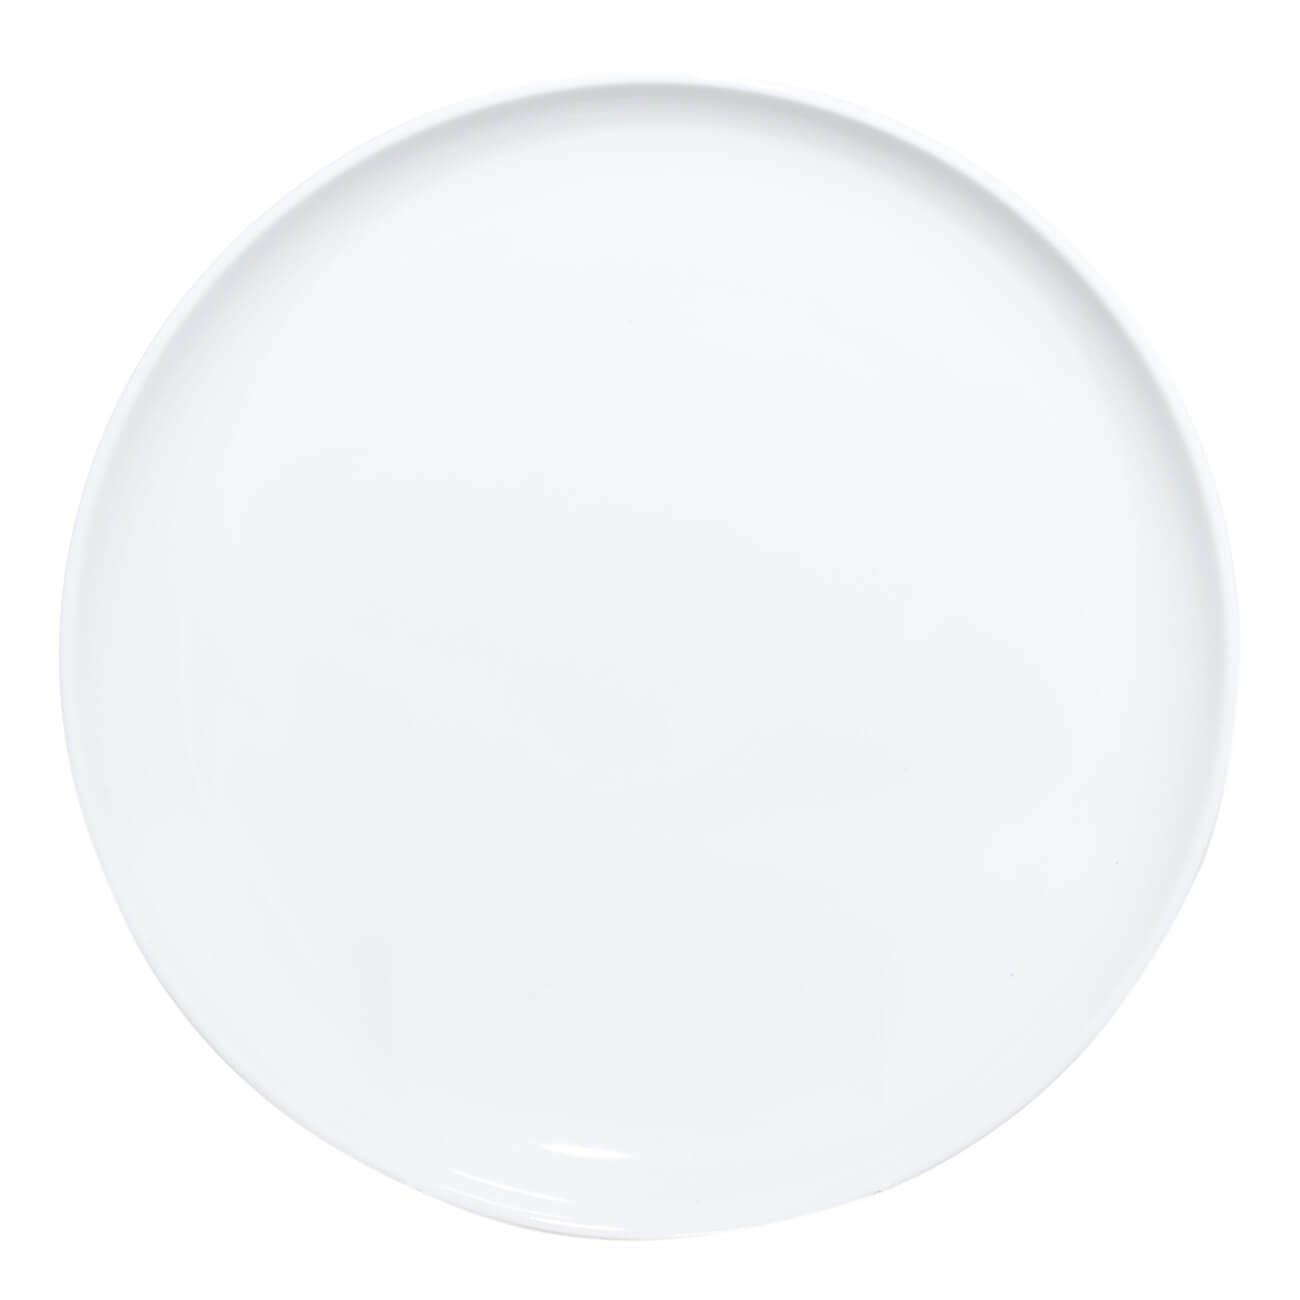 Тарелка обеденная, 25 см, фарфор P, белая, Silence тарелка обеденная 26 см фарфор f белая ideal silver